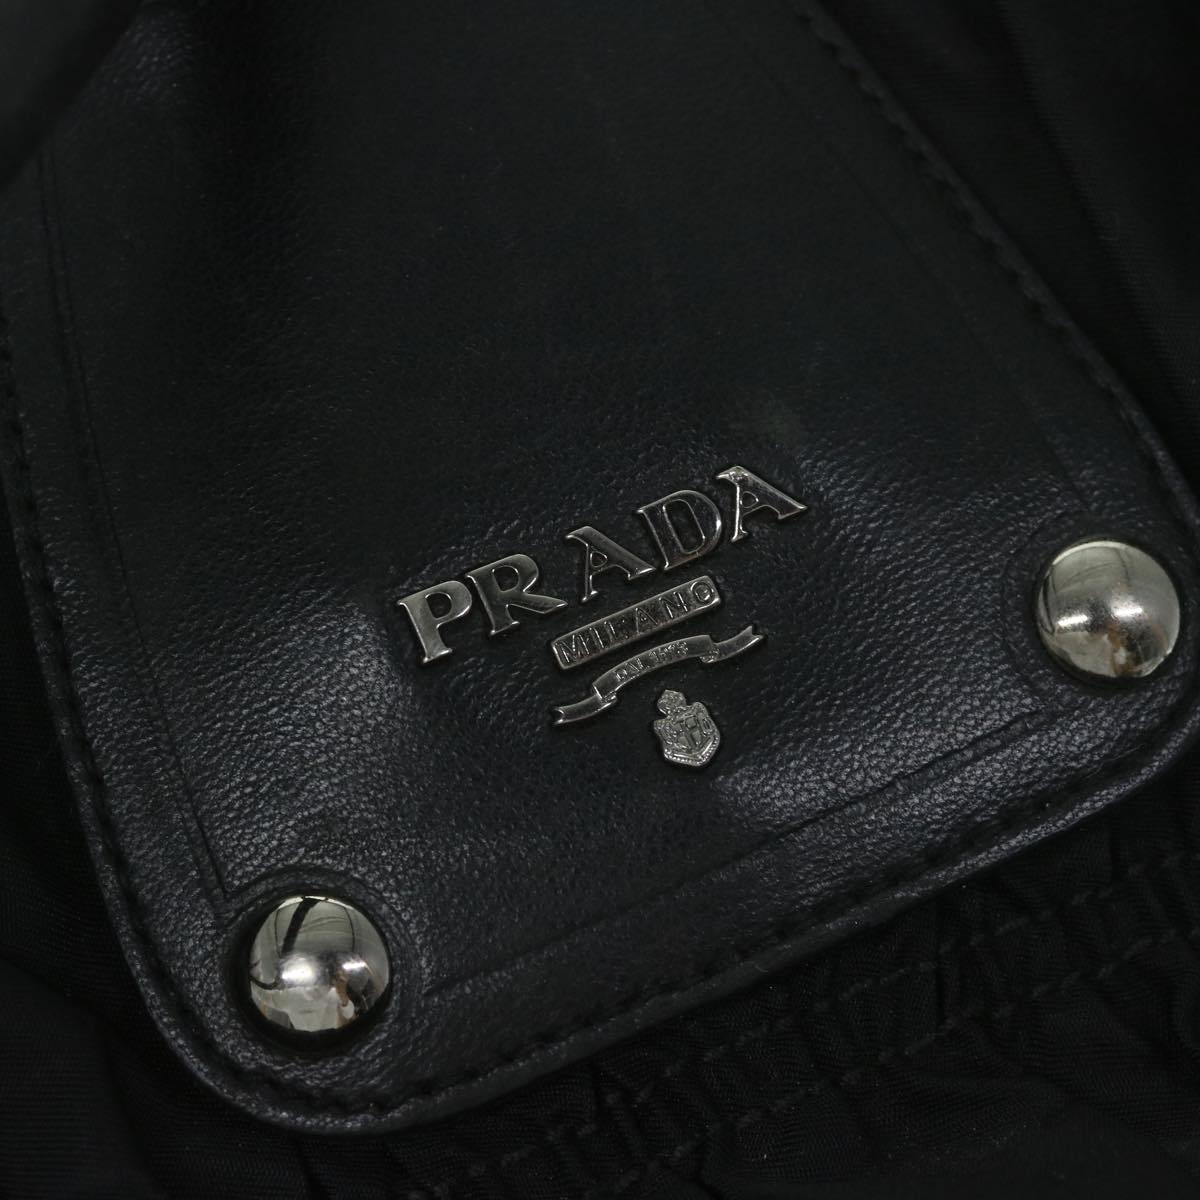 PRADA Hand Bag Nylon Black Auth bs10608